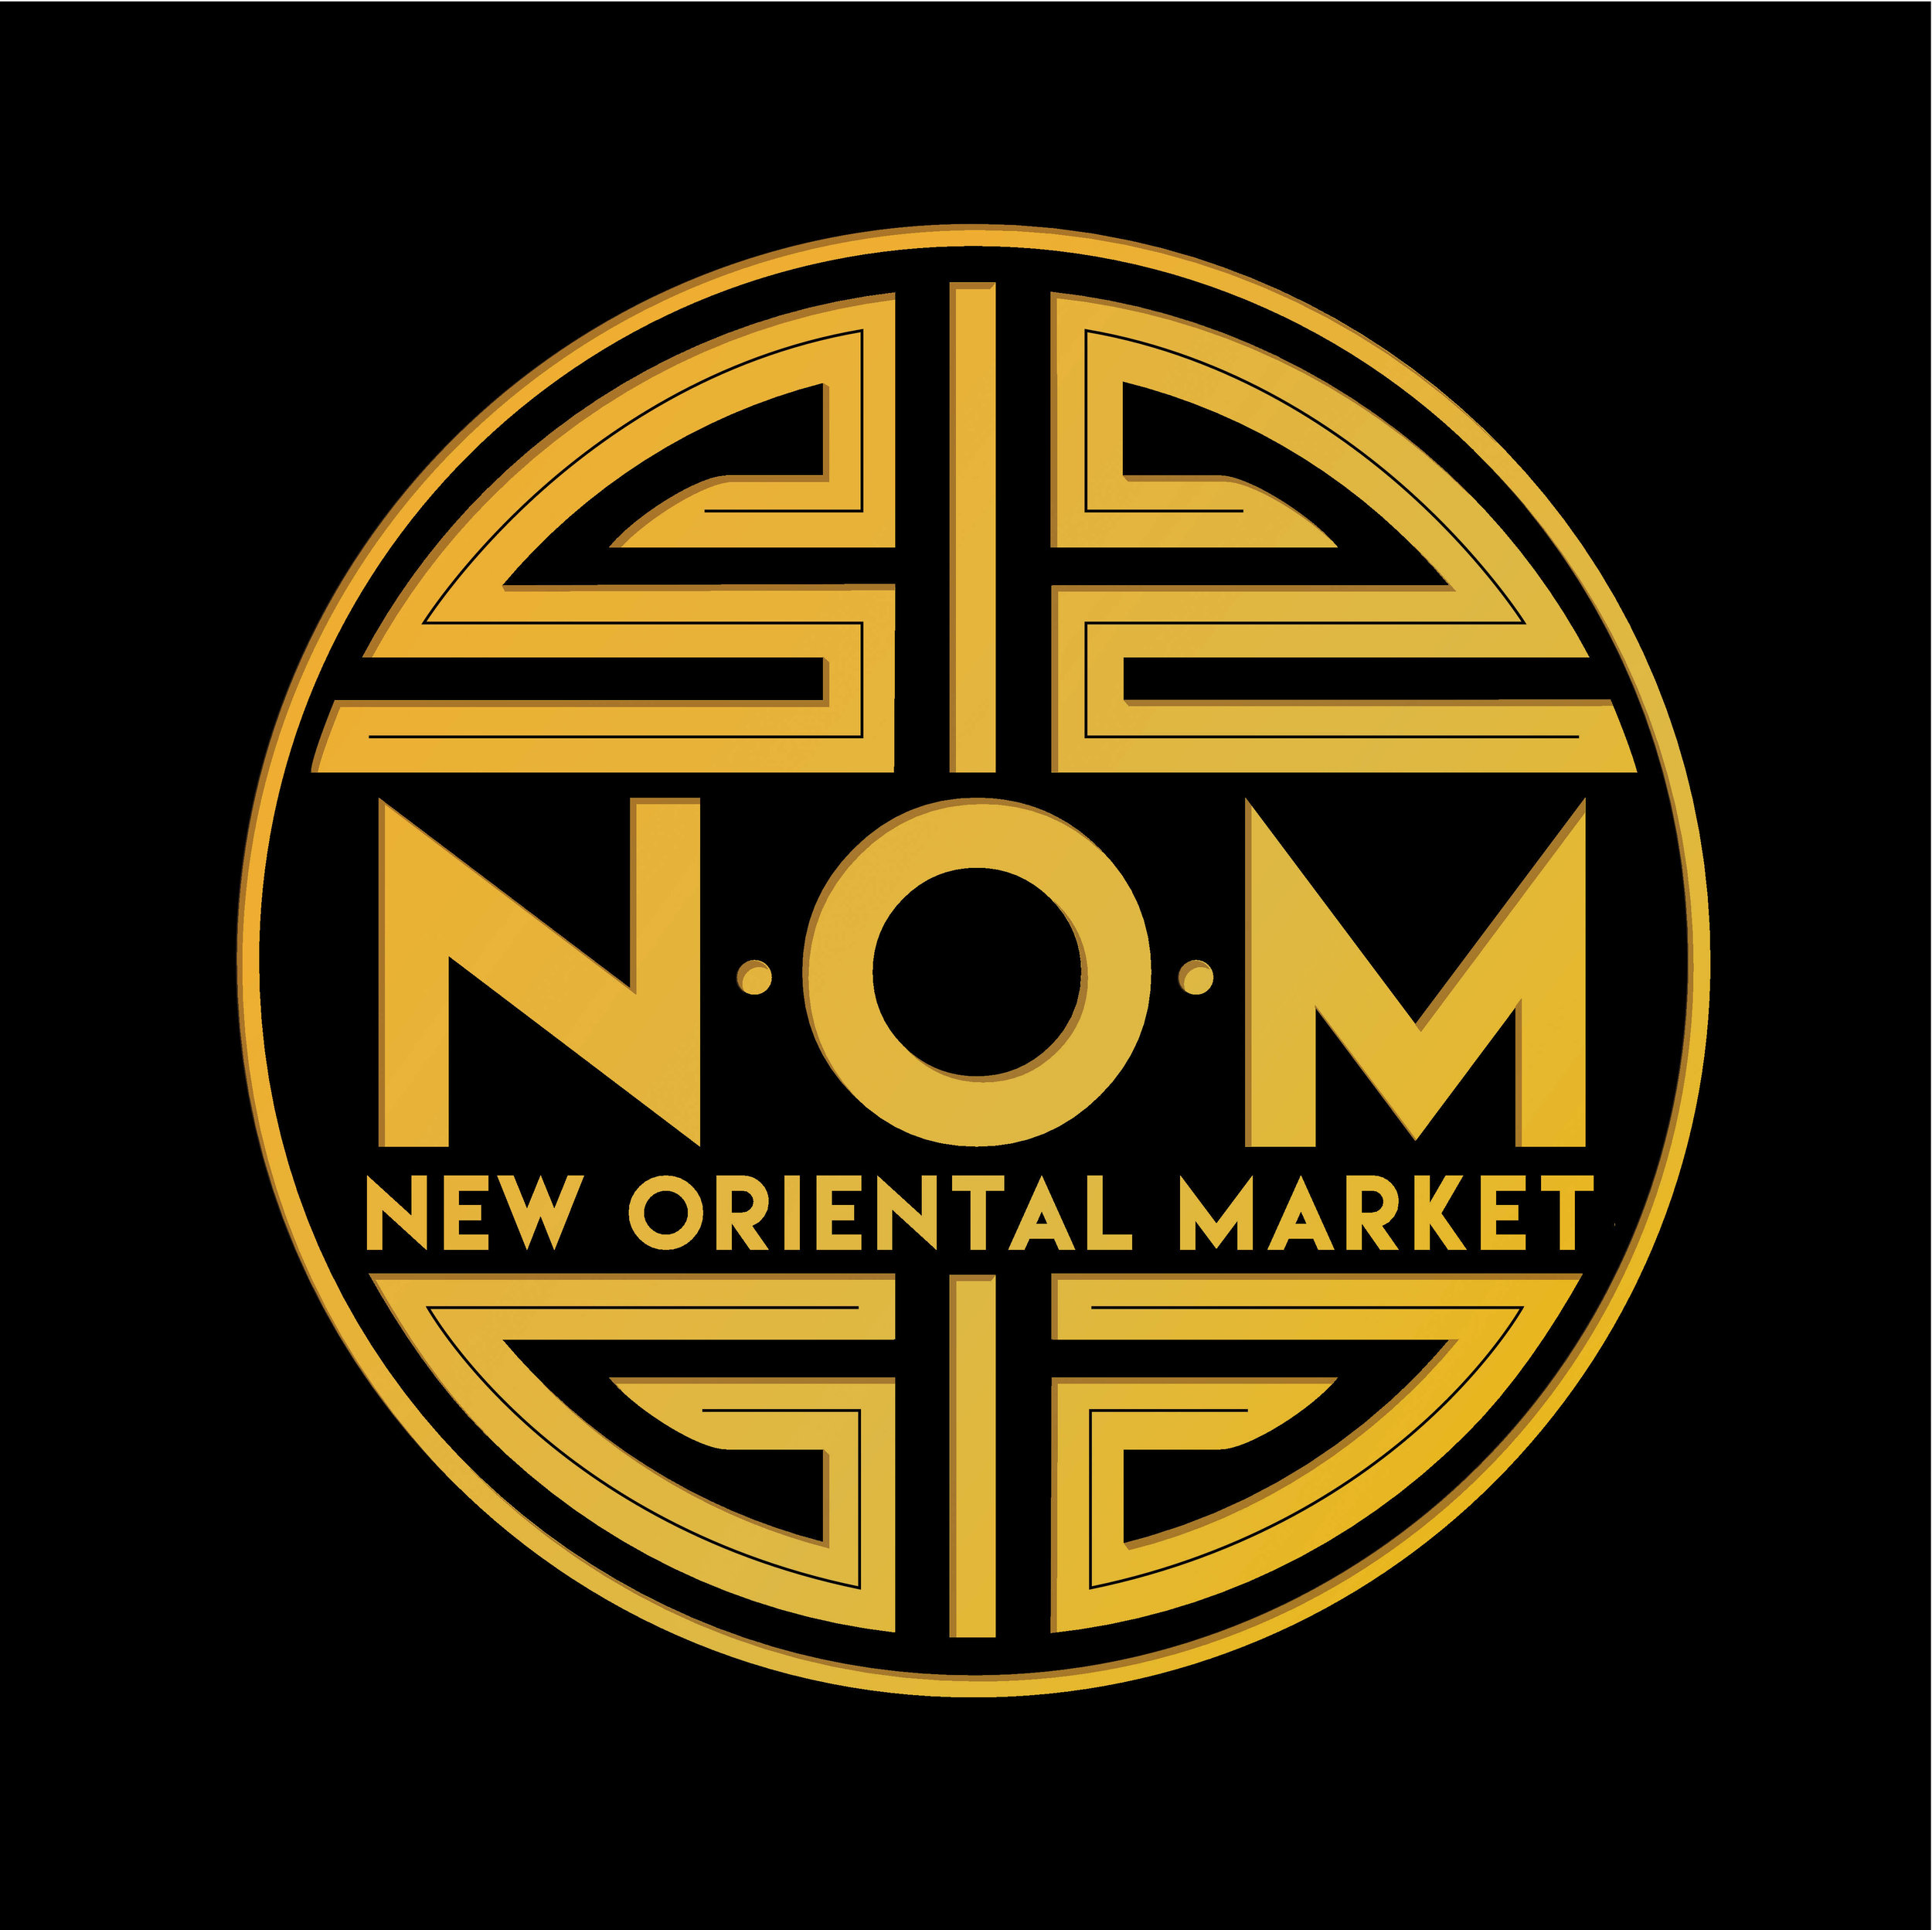 New Oriental Market